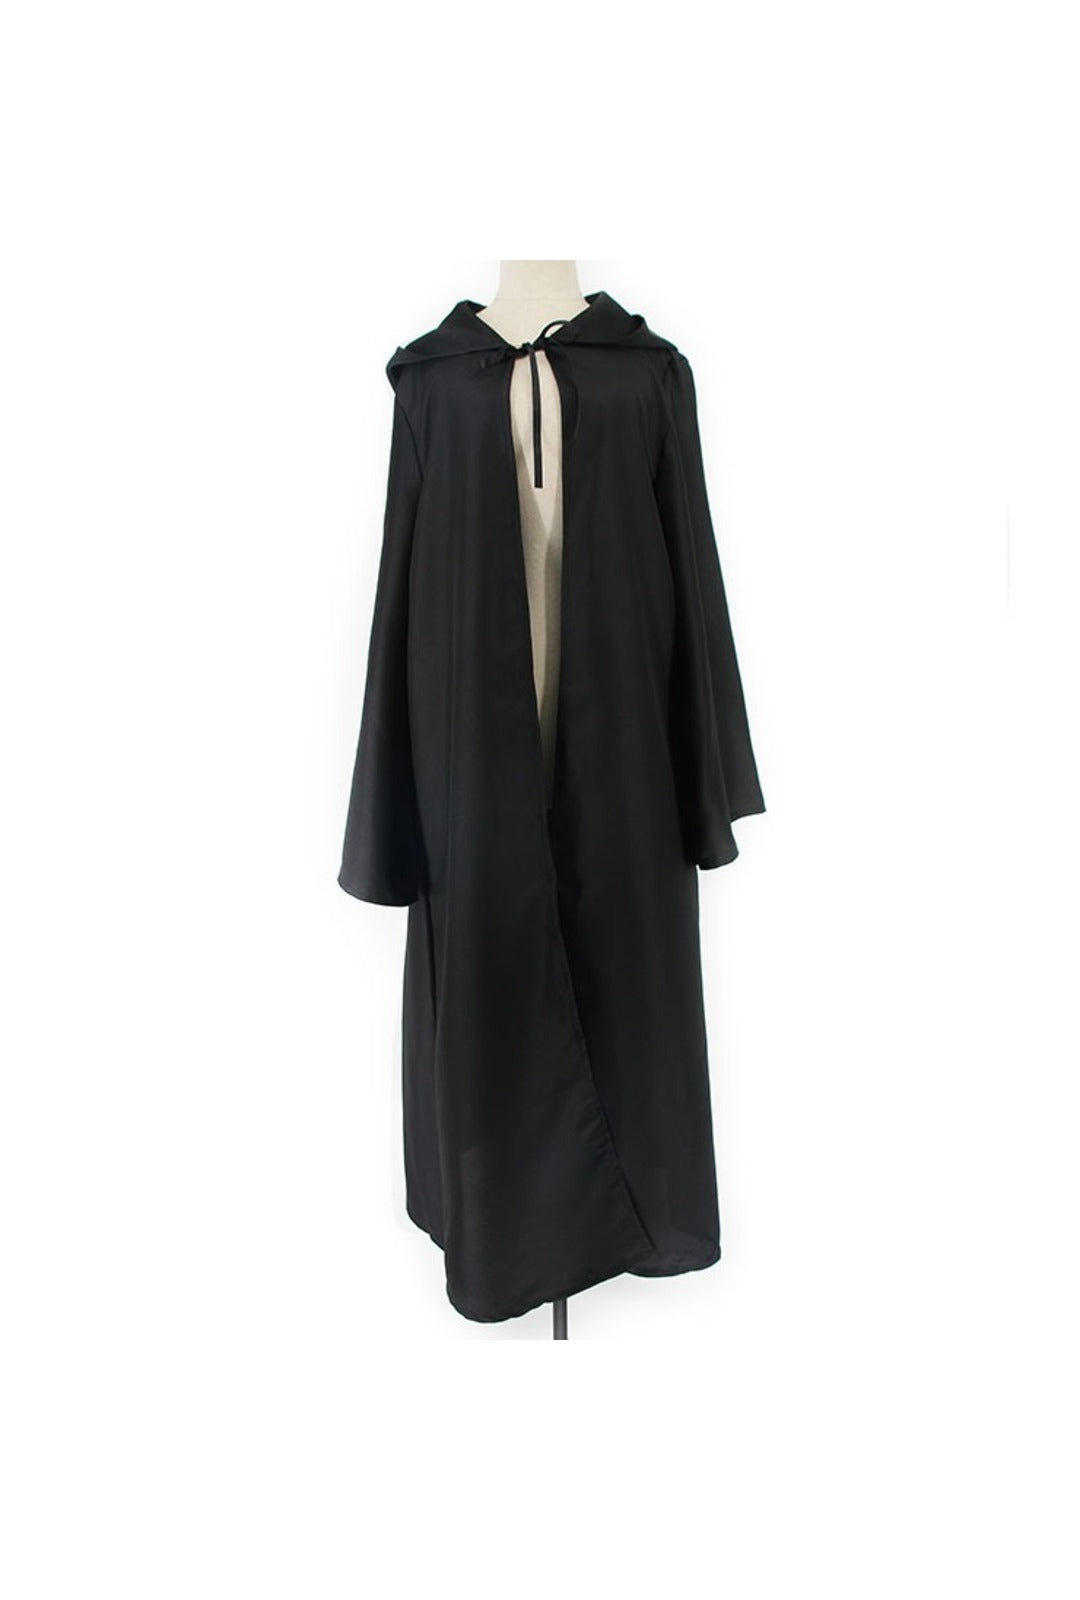 Black Long Hooded Cloak